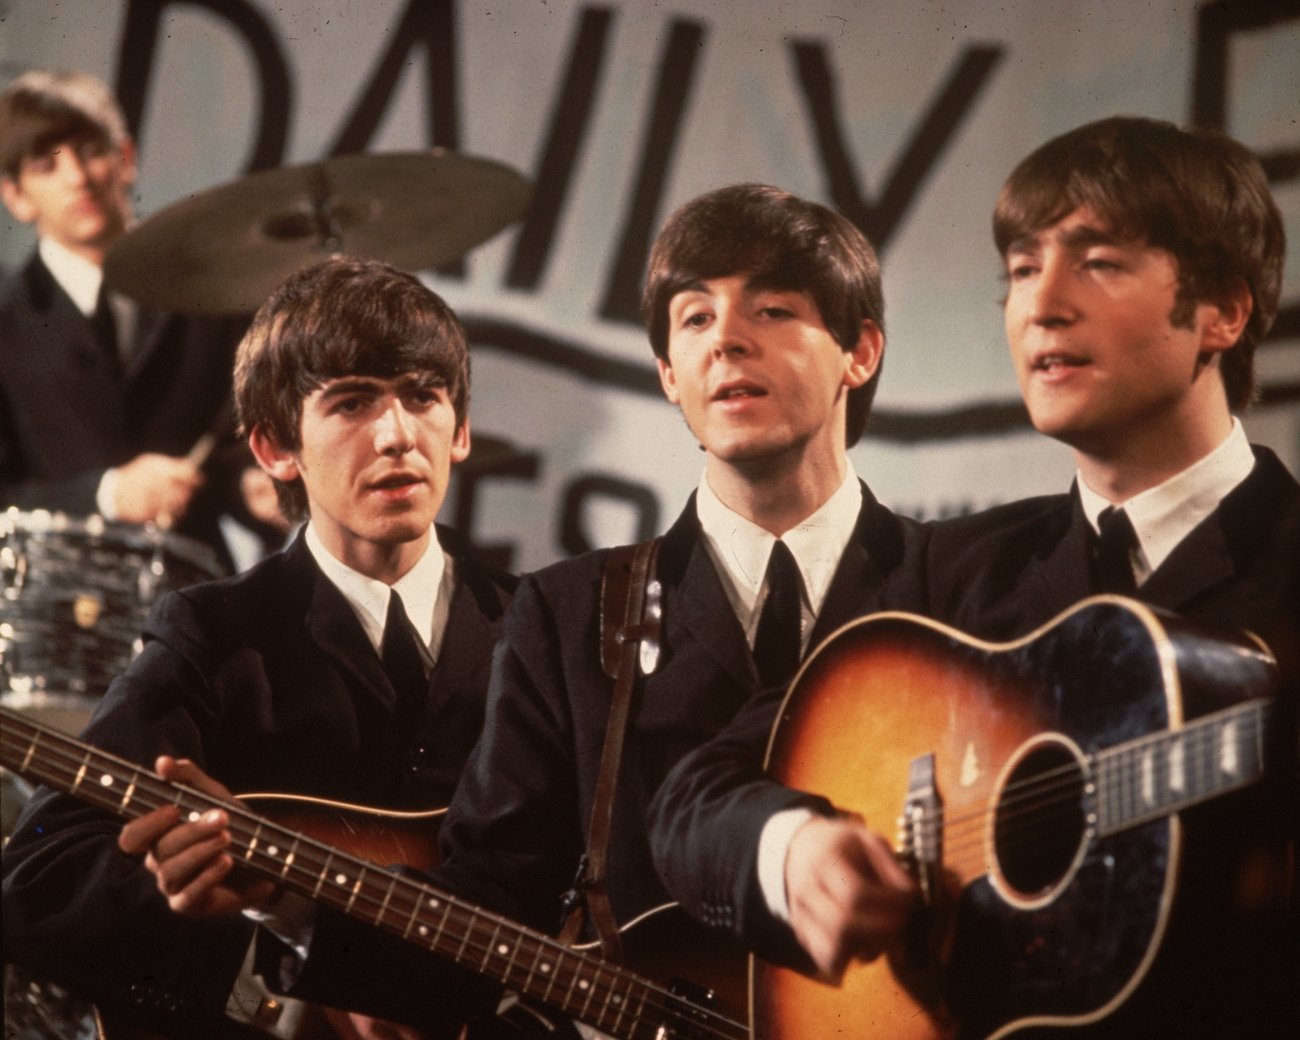 George Harrison, Paul McCartney, and John Lennon on TV in 1963.